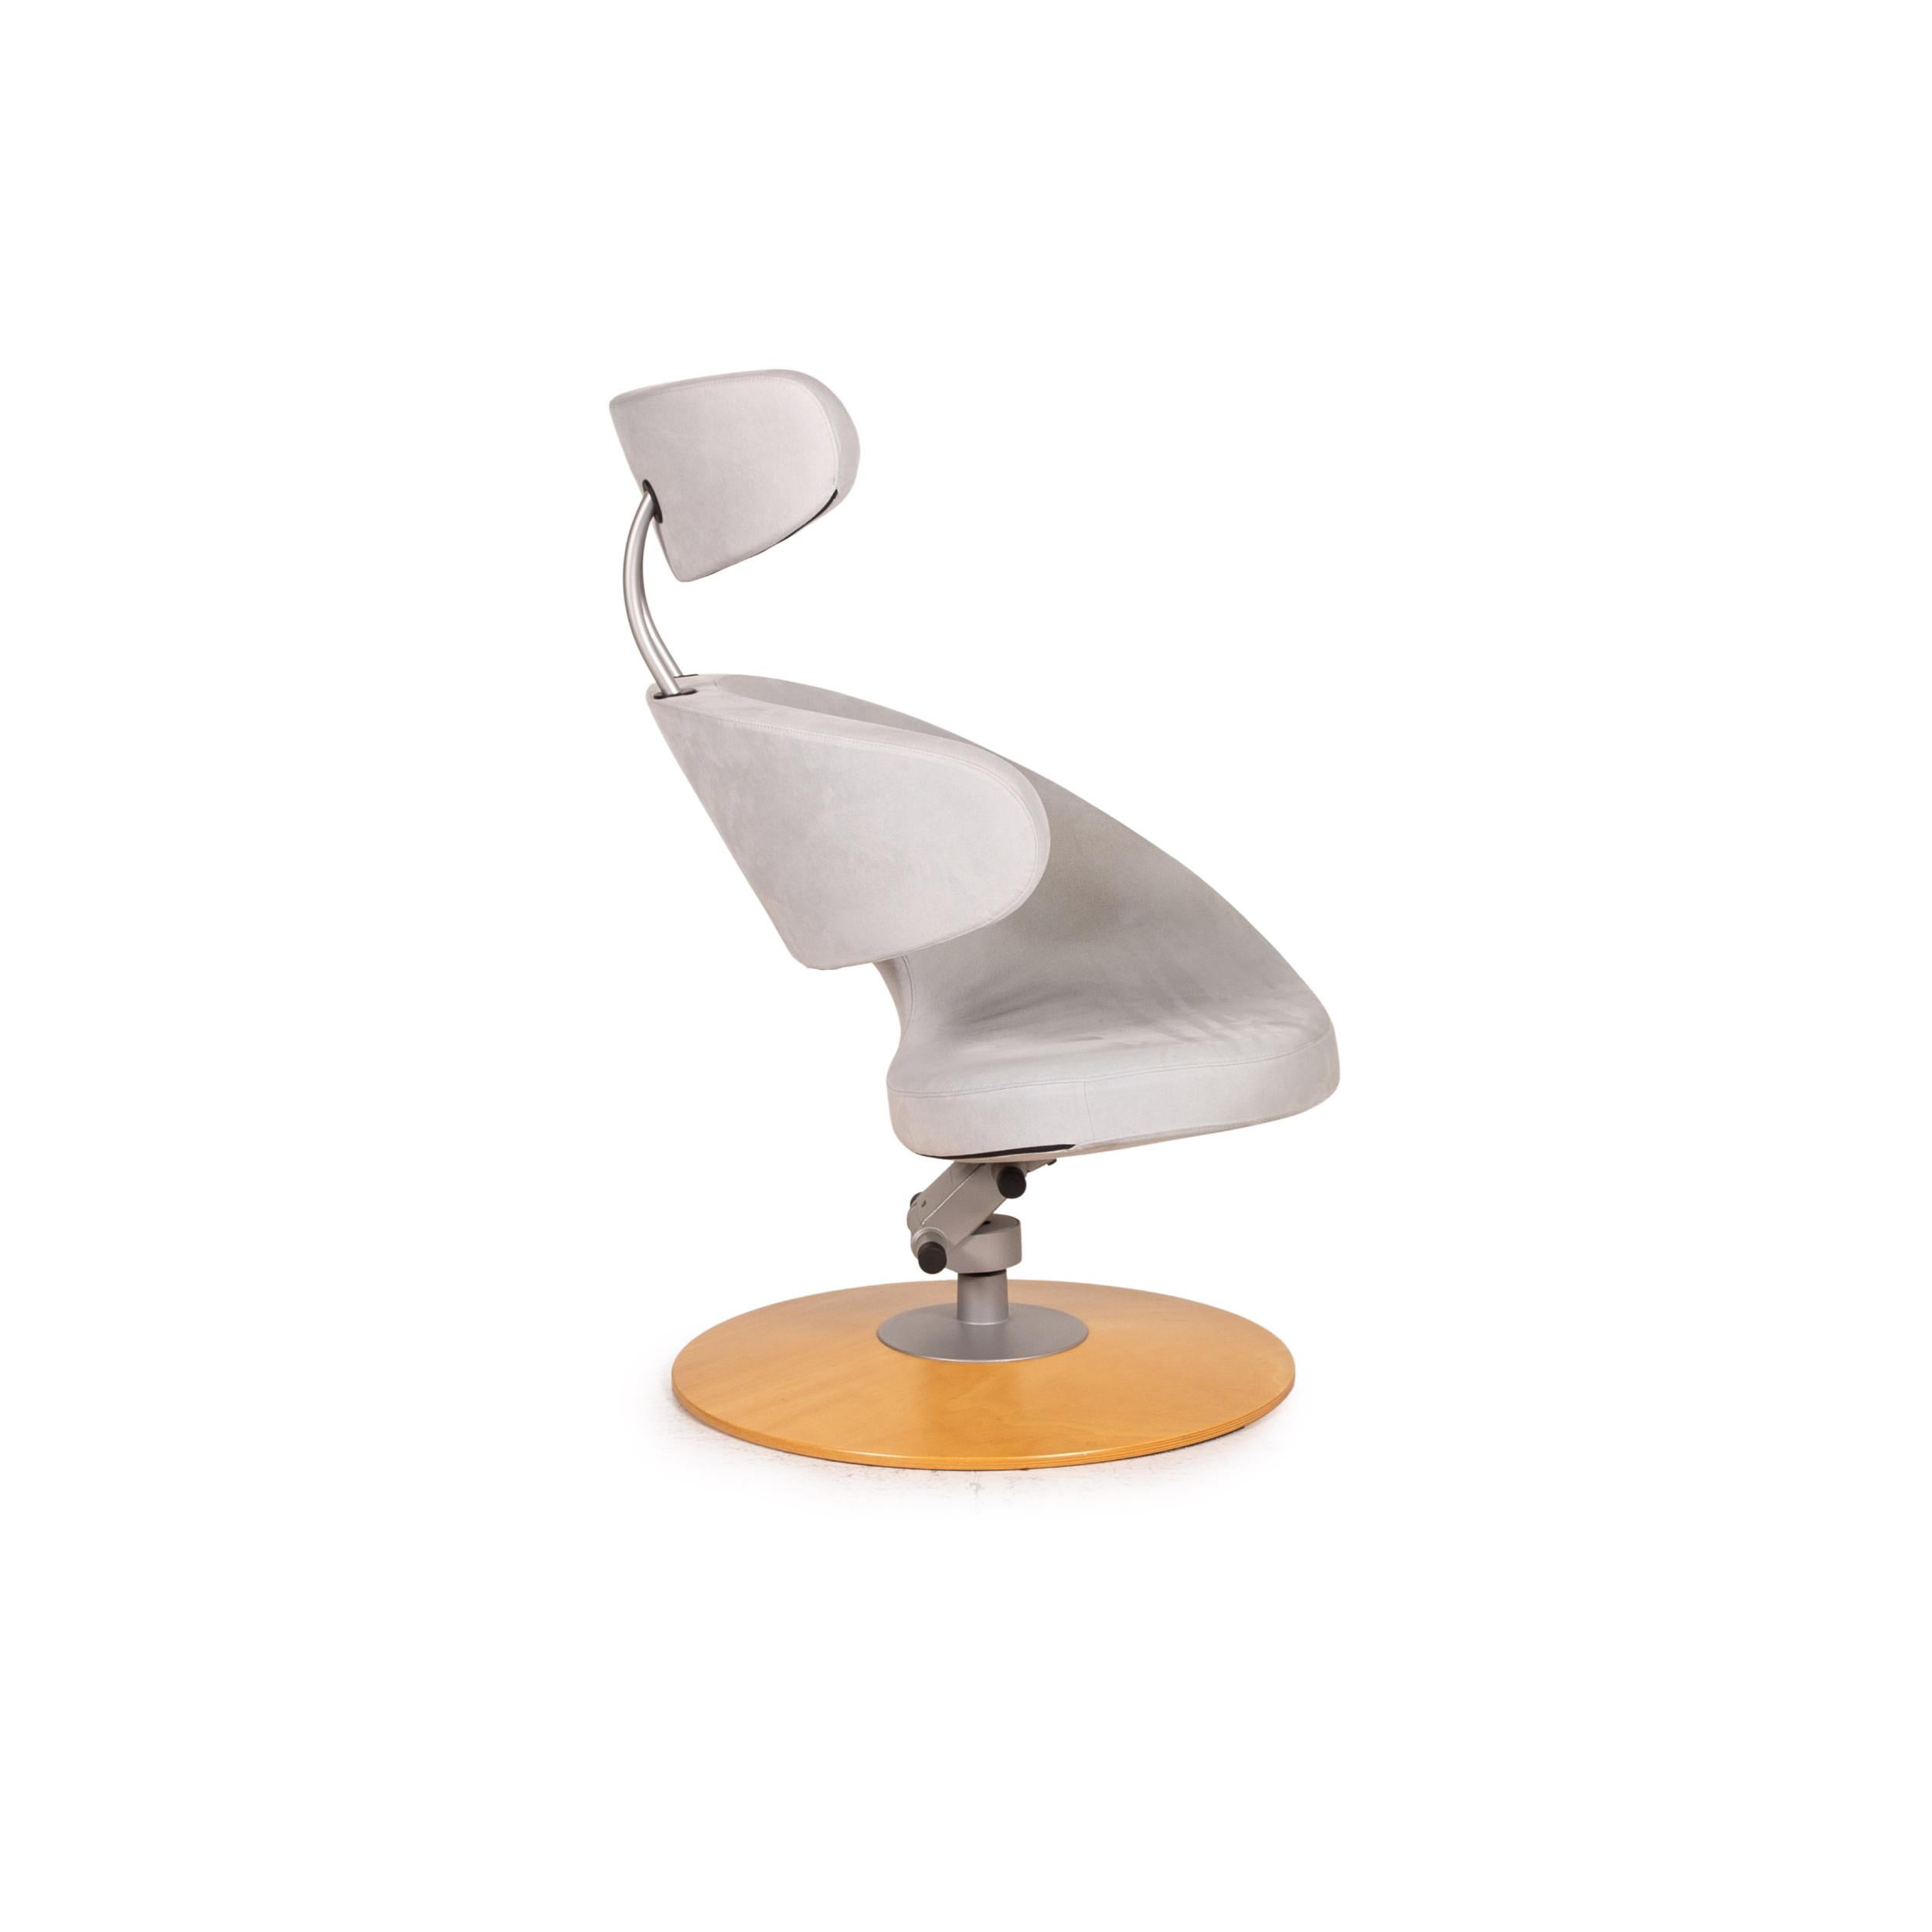 Stokke Peel II fabric armchair incl. Stool gray function headrest 2